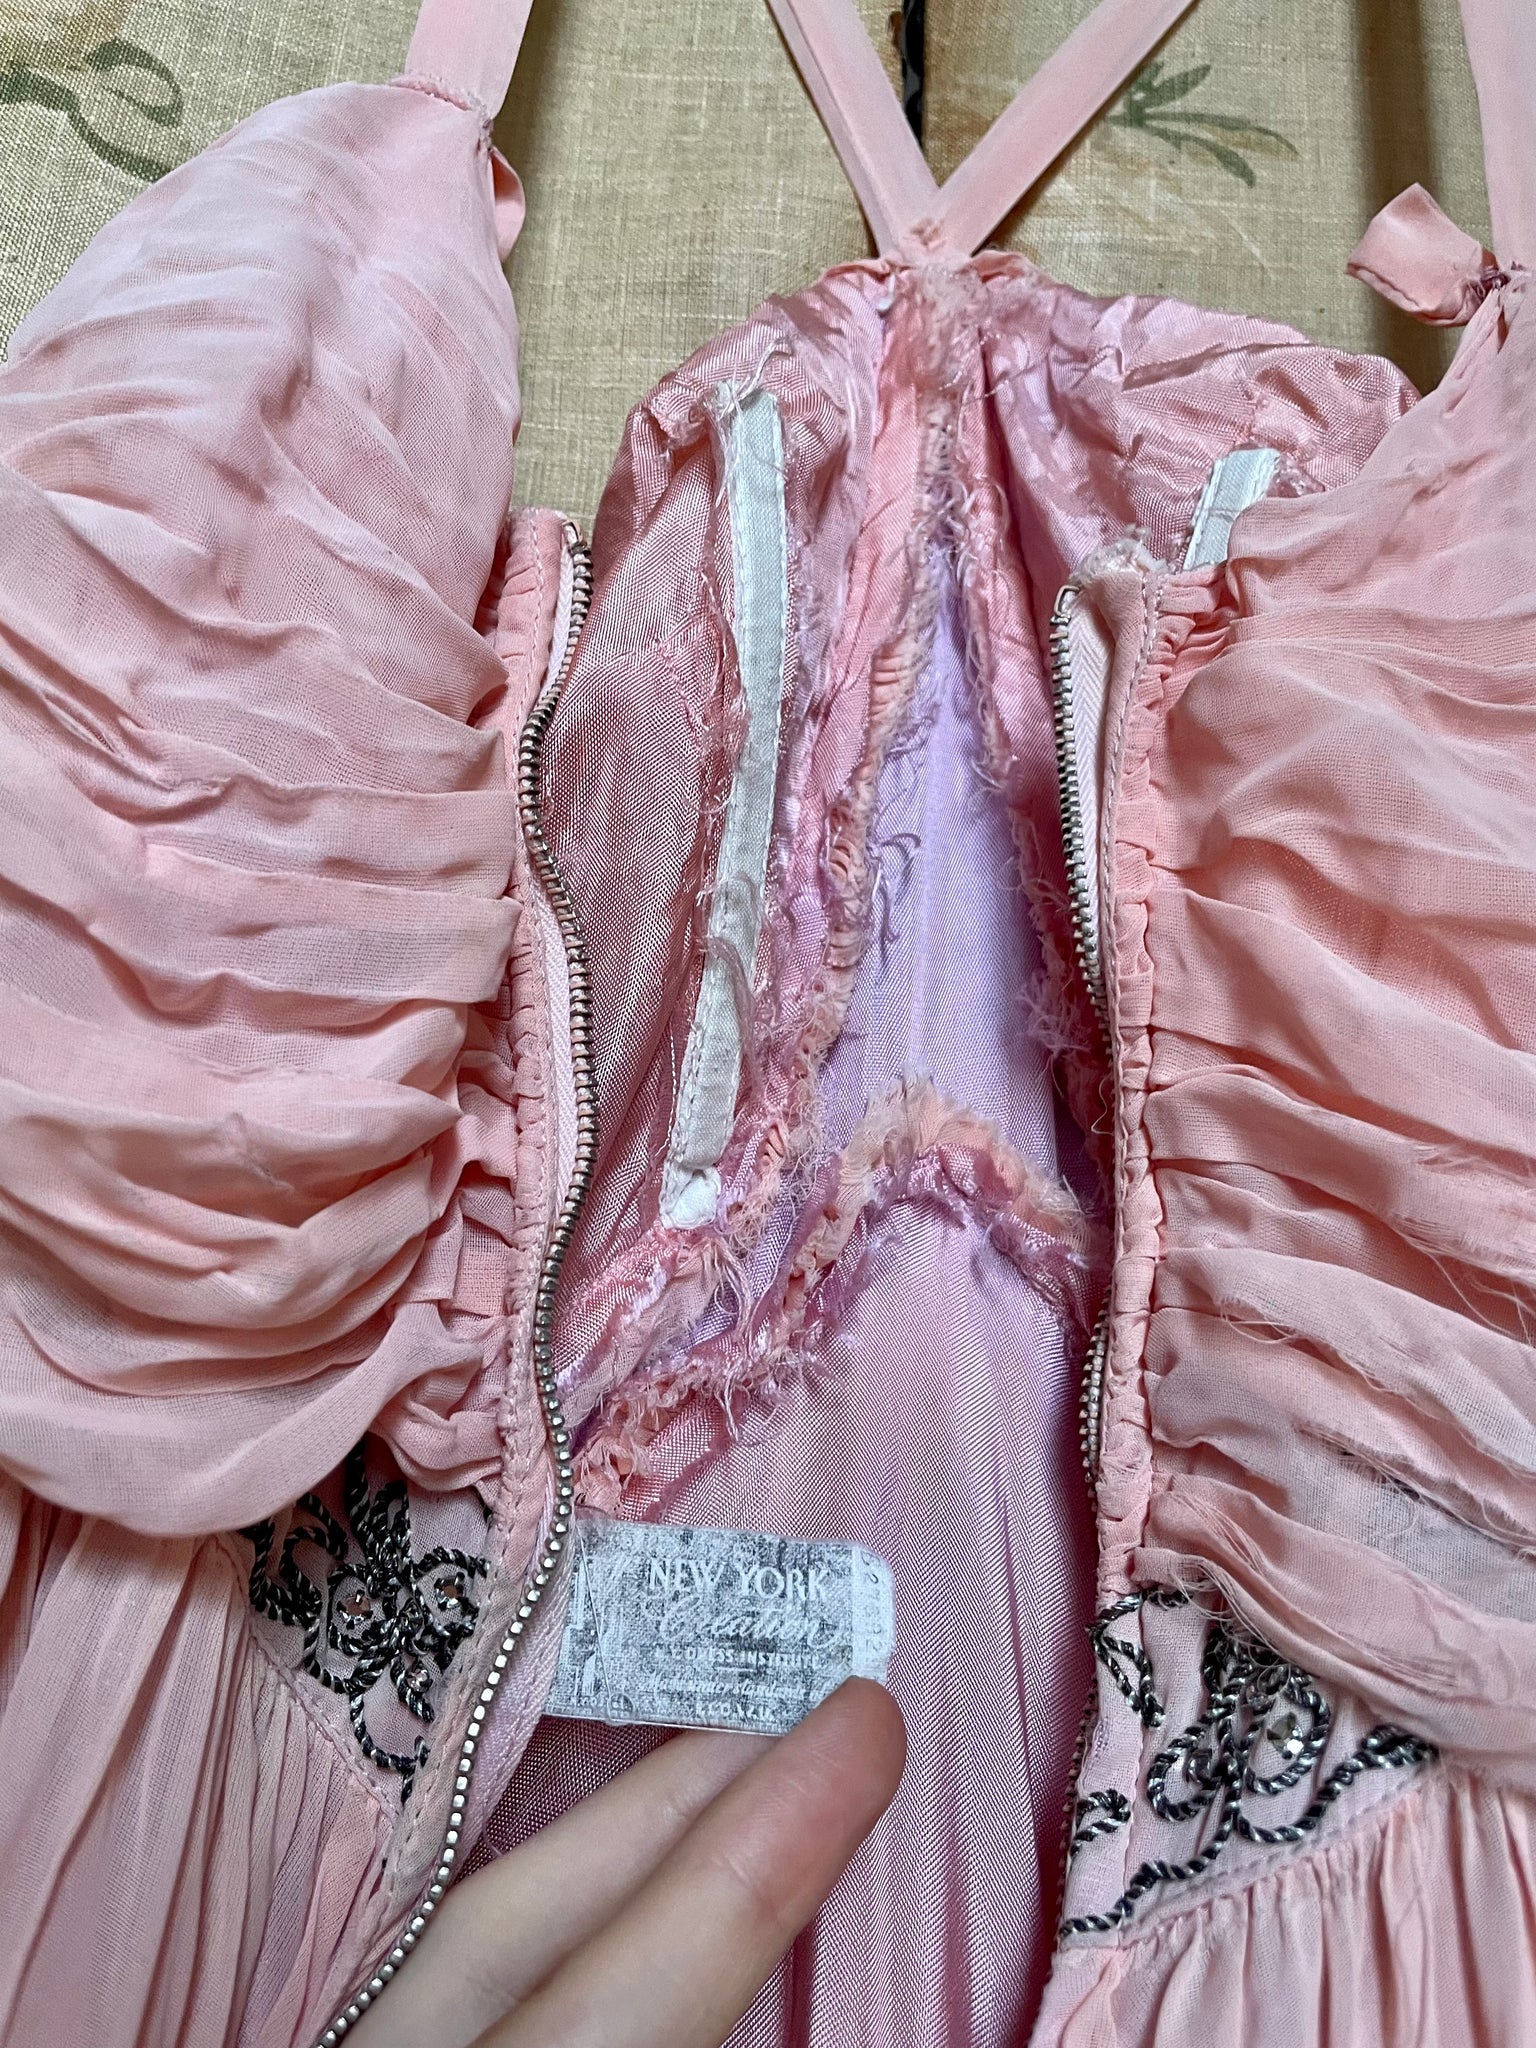 1940s Pale Blush Pink Rayon Chiffon Dress Gown Soutache Crystals